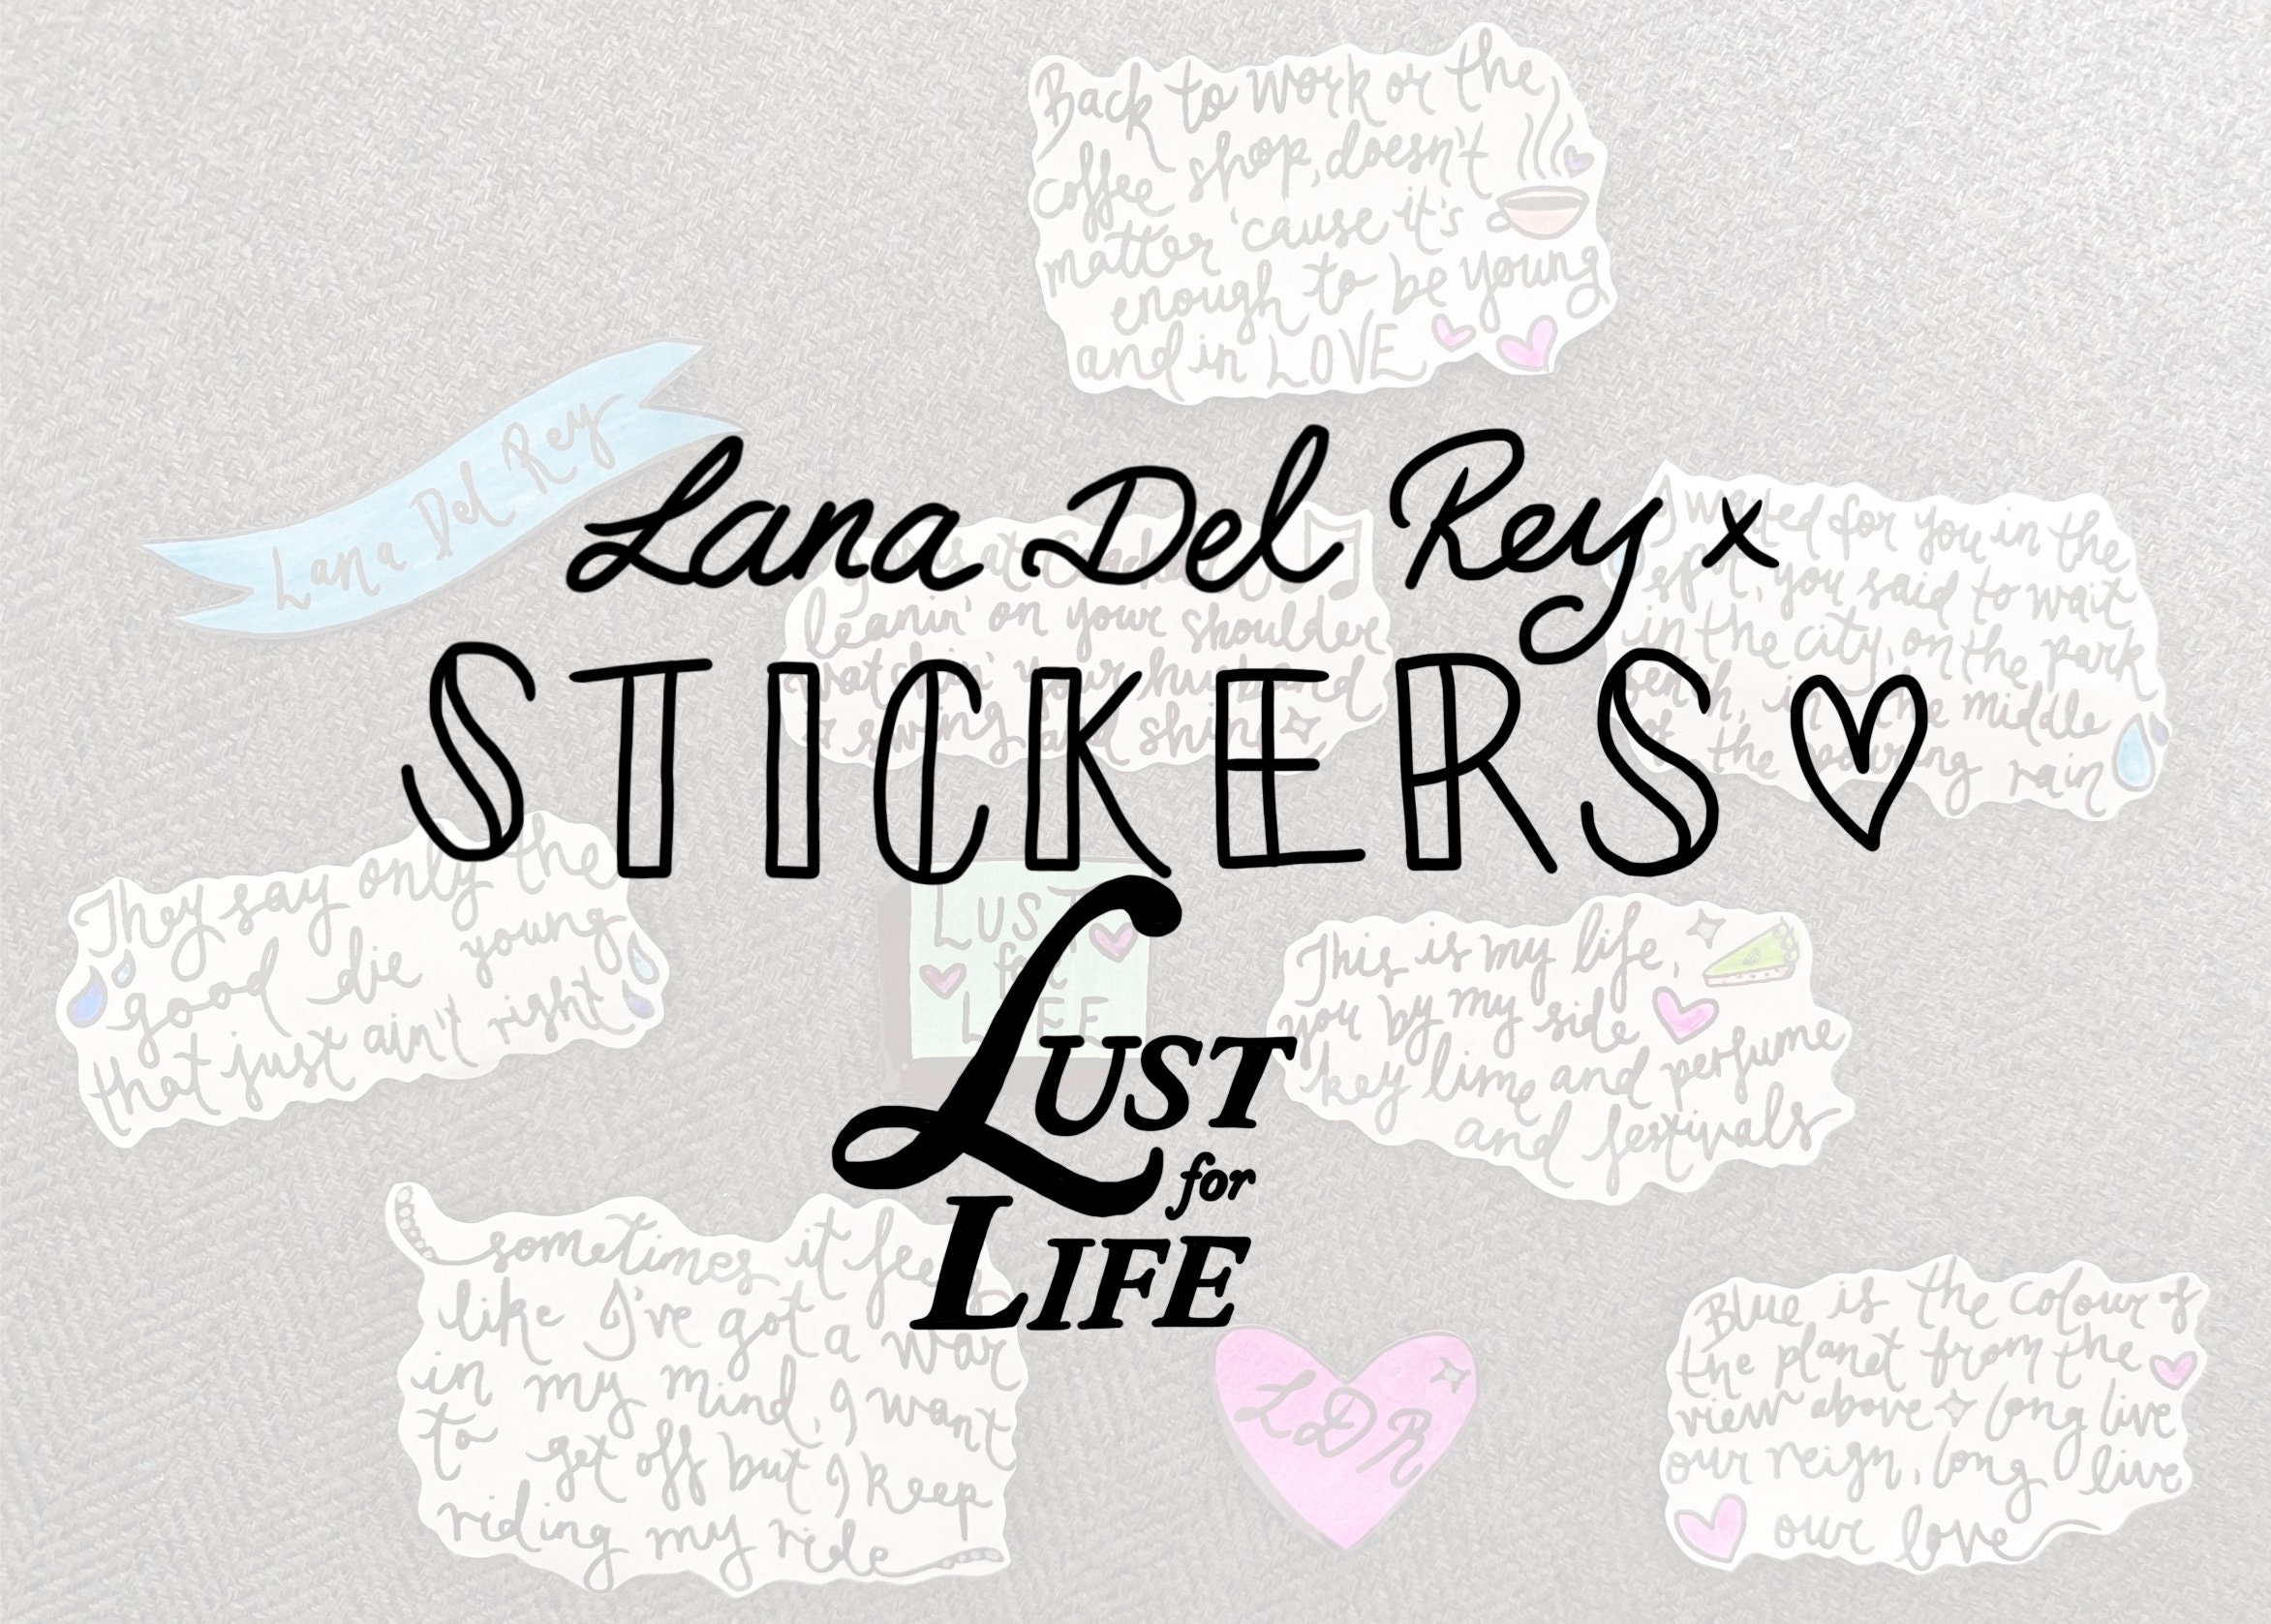 Lust for life lana. Lana del Rey Lust for Life Lyrics. Lana del Rey Lust for Life альбом. Наклейки тексты из песен.